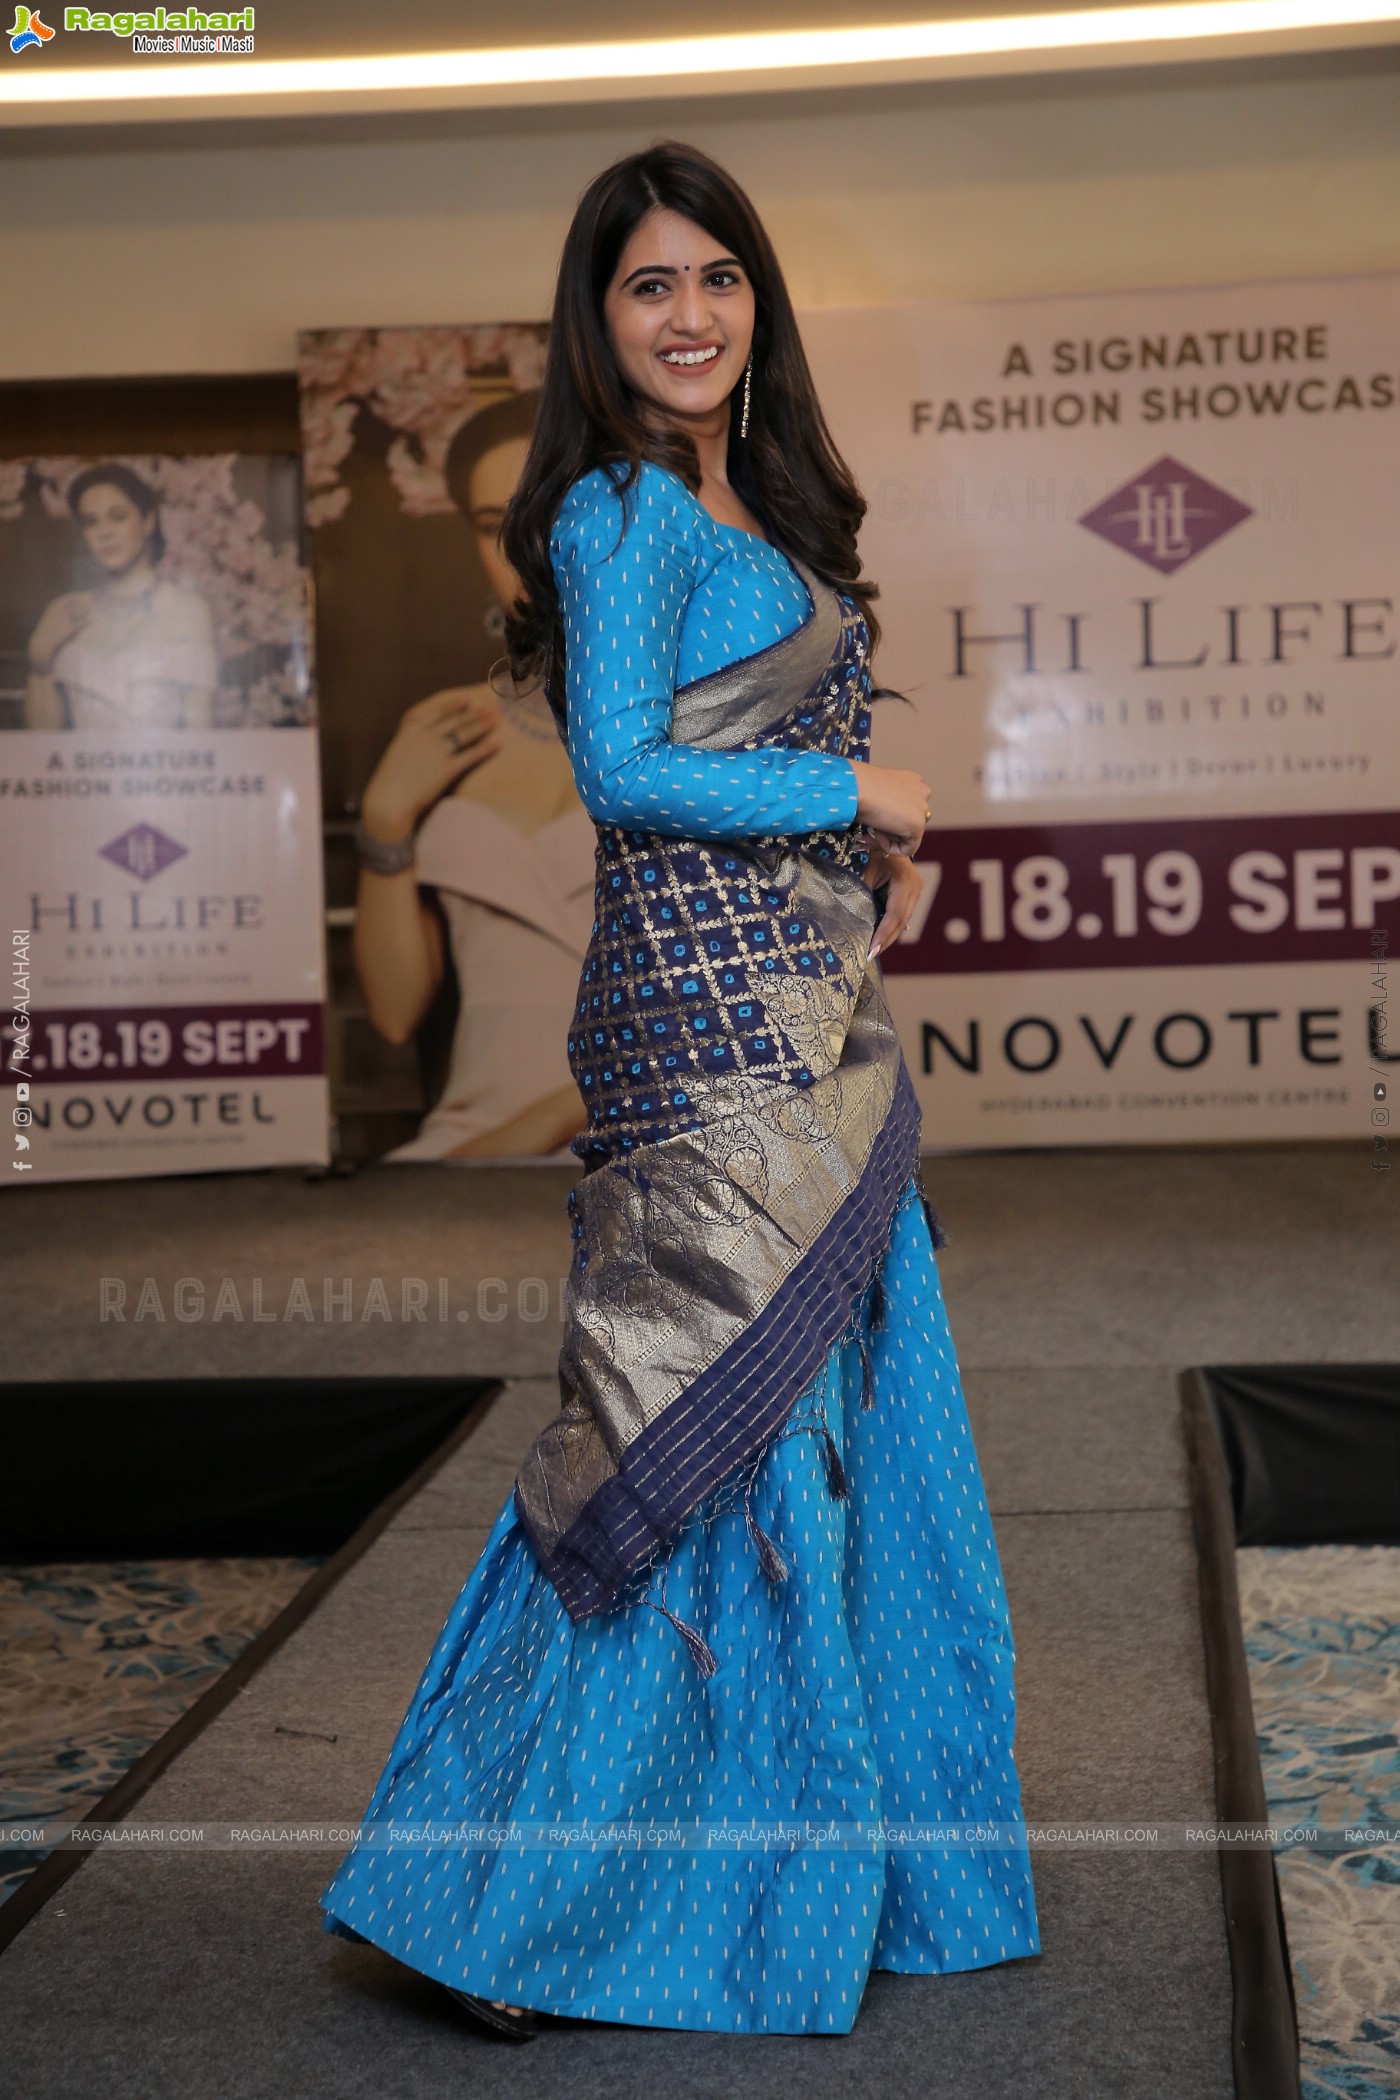 Hi Life Exhibition September 2022 Curtain Raiser and Fashion Showcase, Hyderabad